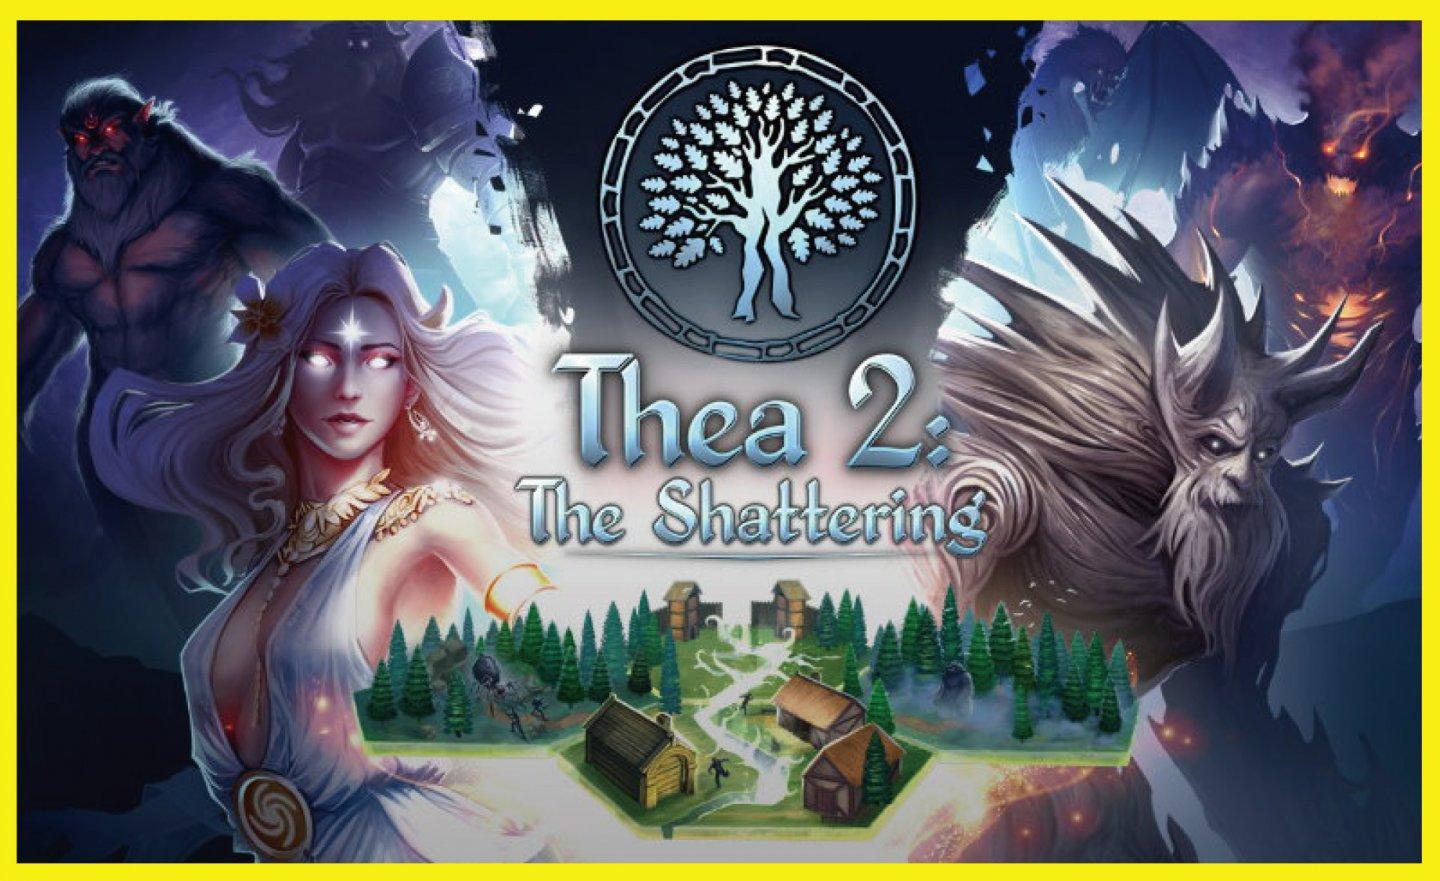 【限時免費】GOG 平台放送《Thea 2: The Shattering》，2022 年 4 月 1 日晚上 20:59 前截止